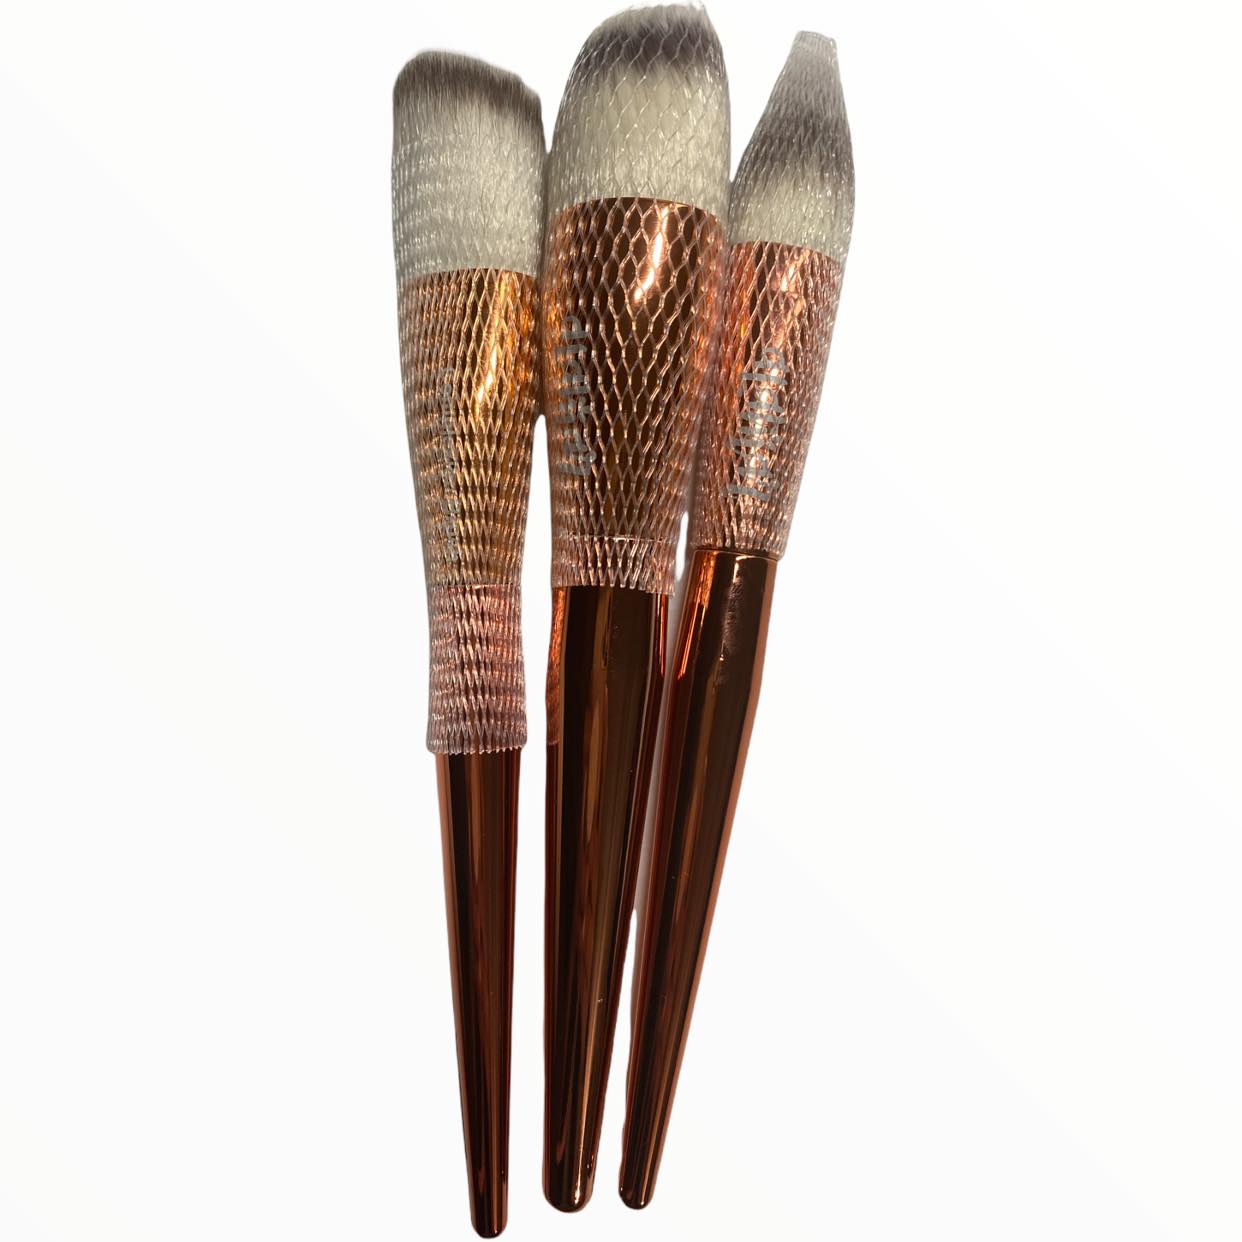 Set of 3 makeup brushes